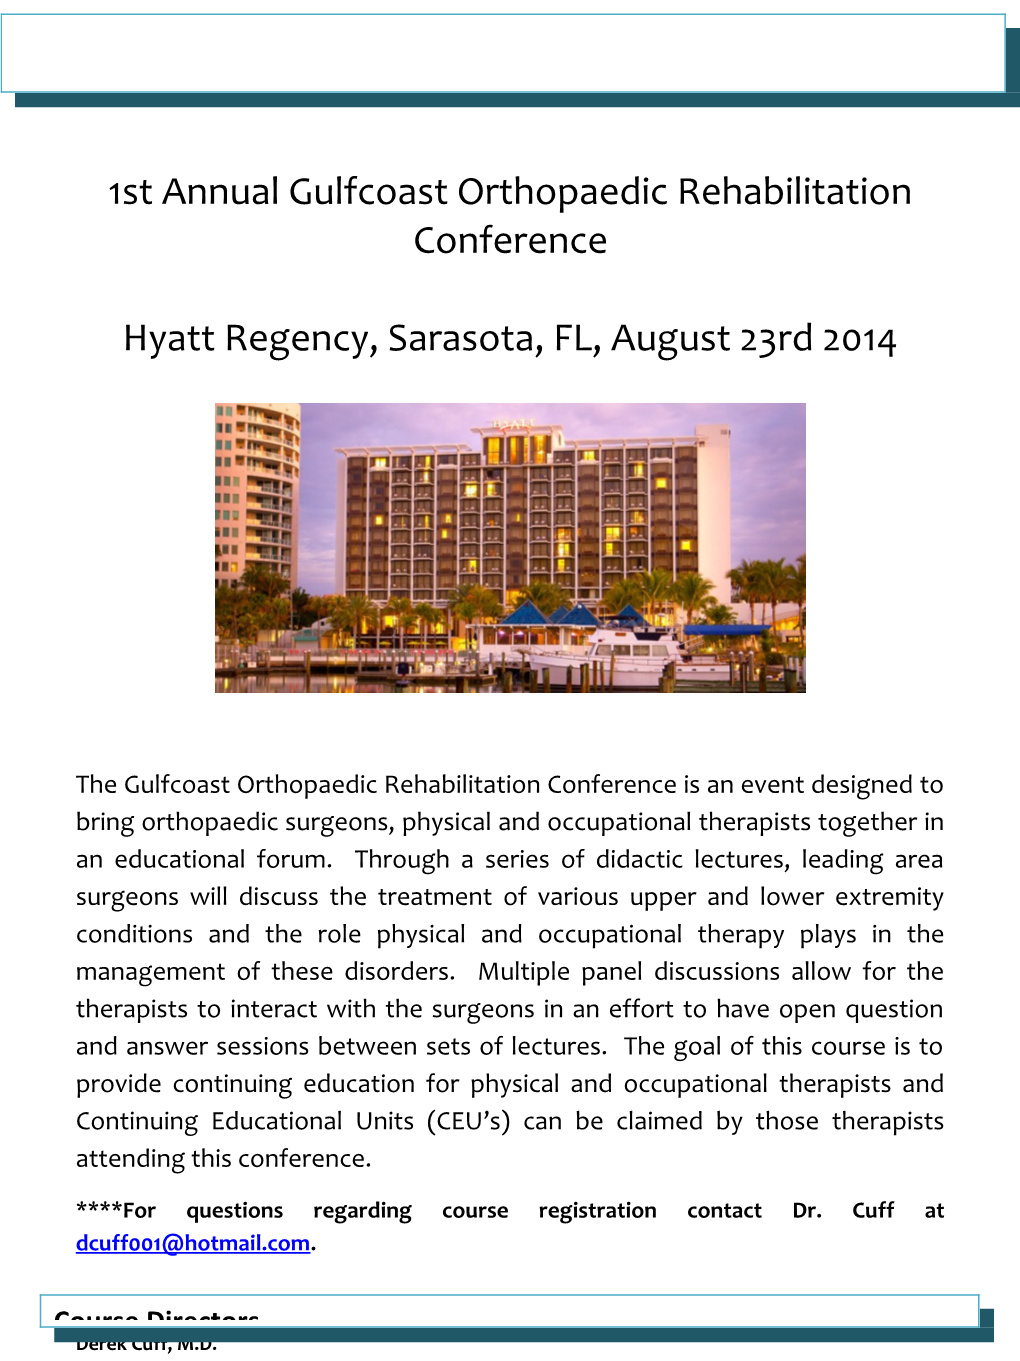 1St Annual Gulfcoast Orthopaedic Rehabilitation Conference